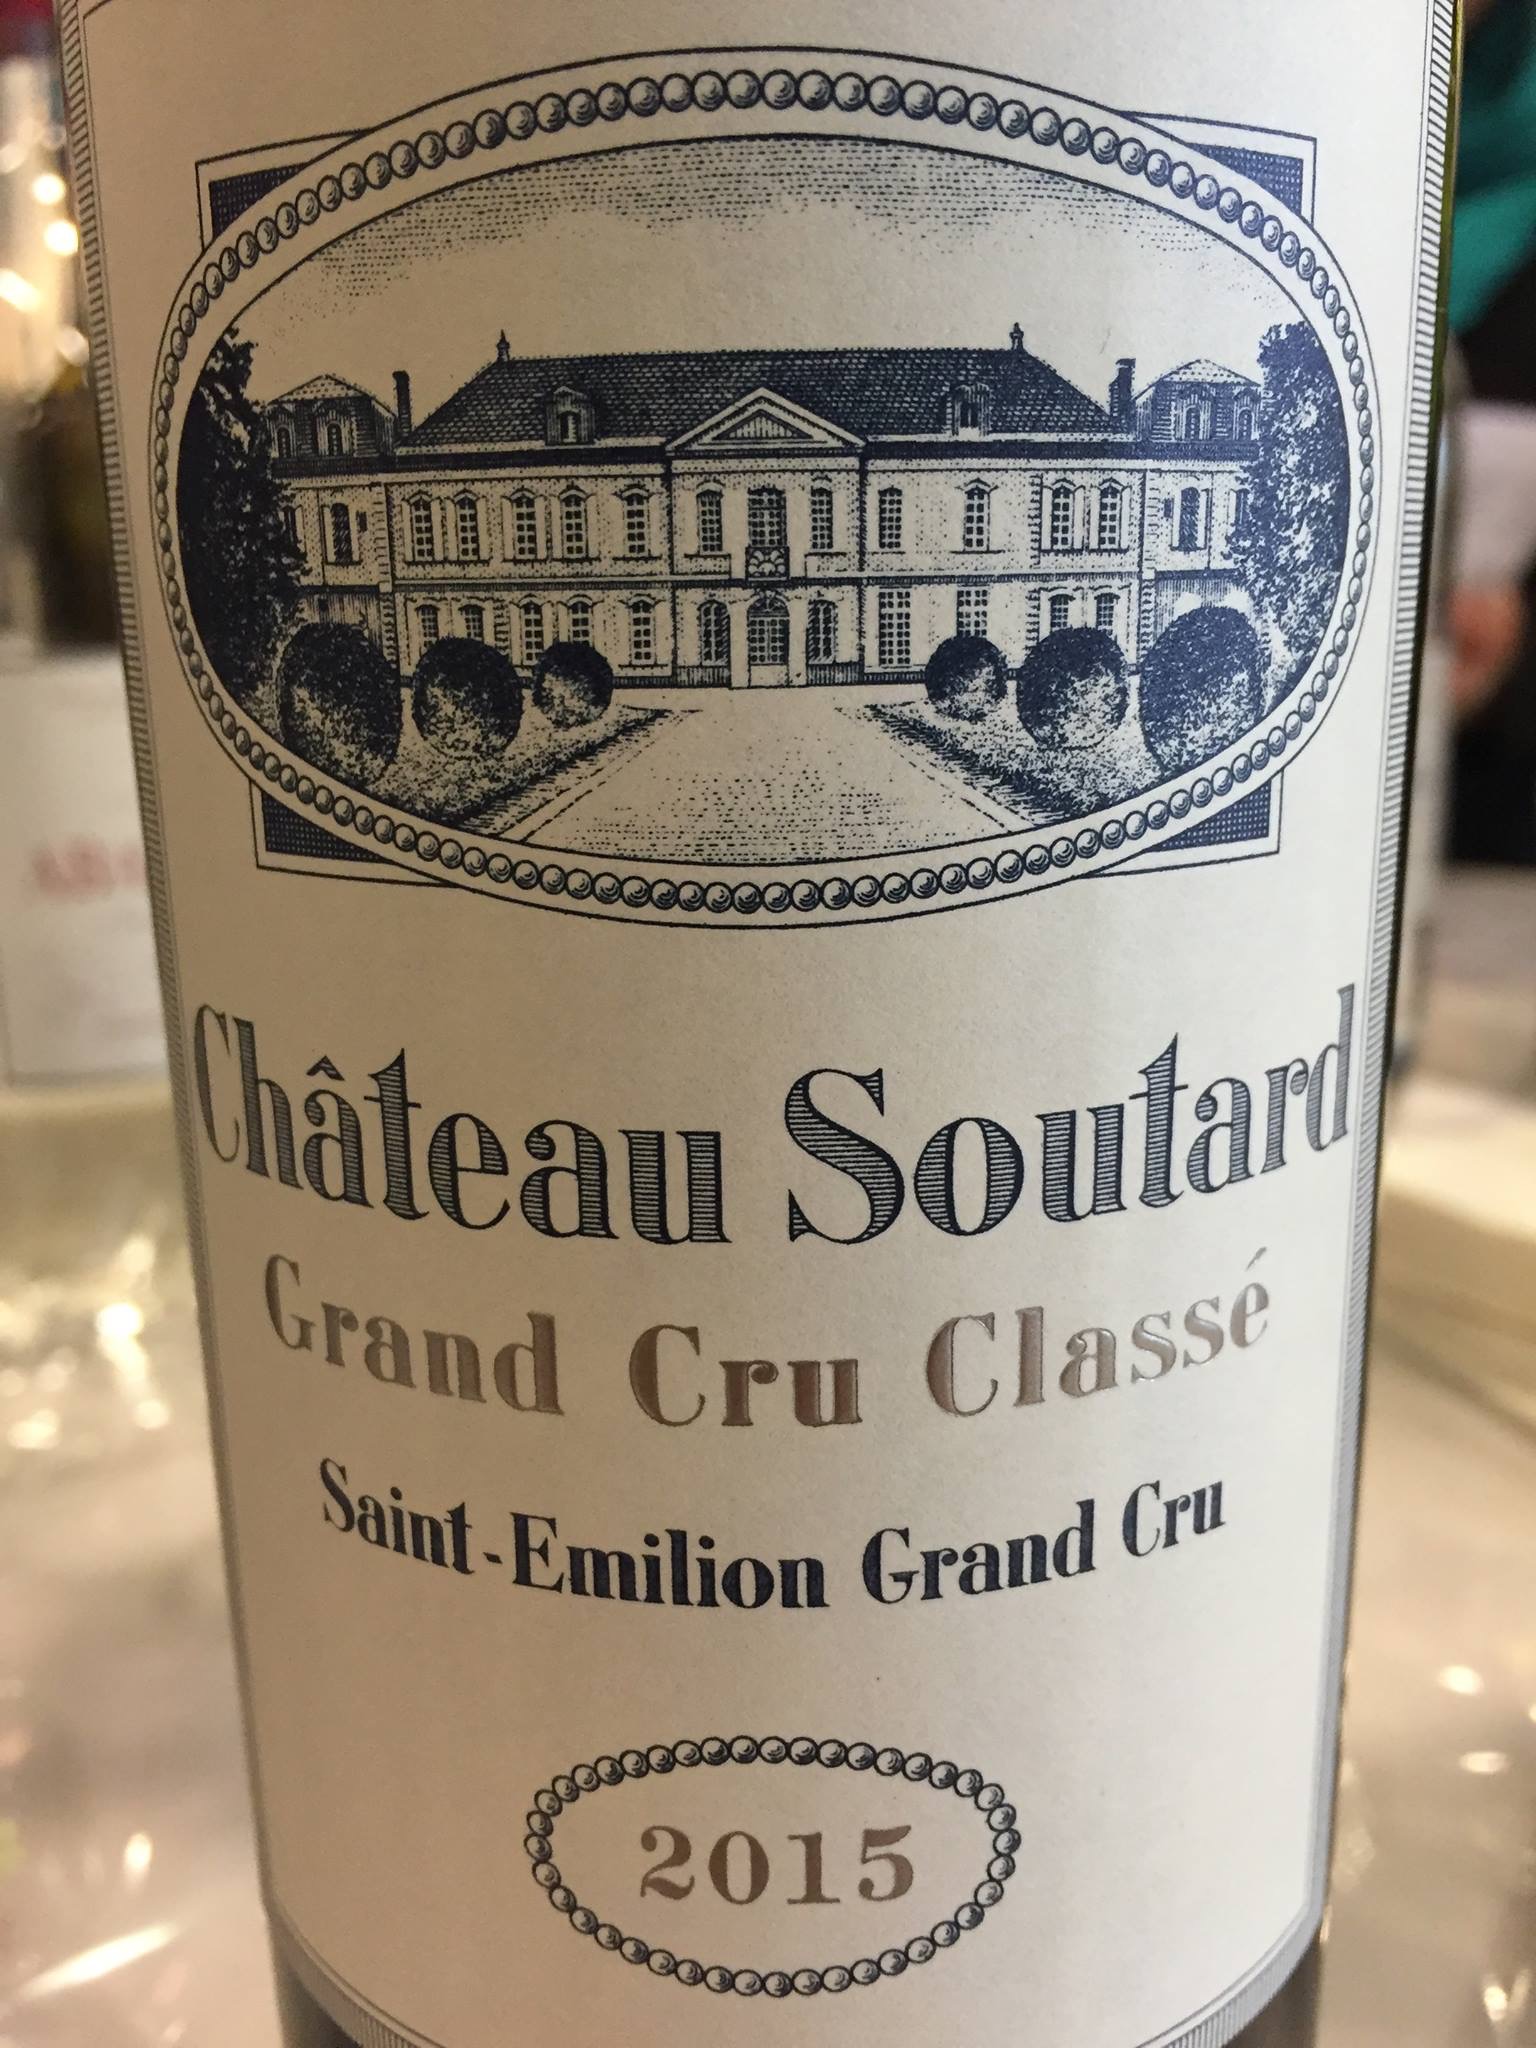 Château Soutard 2015 – Saint-Emilion Grand Cru Classé